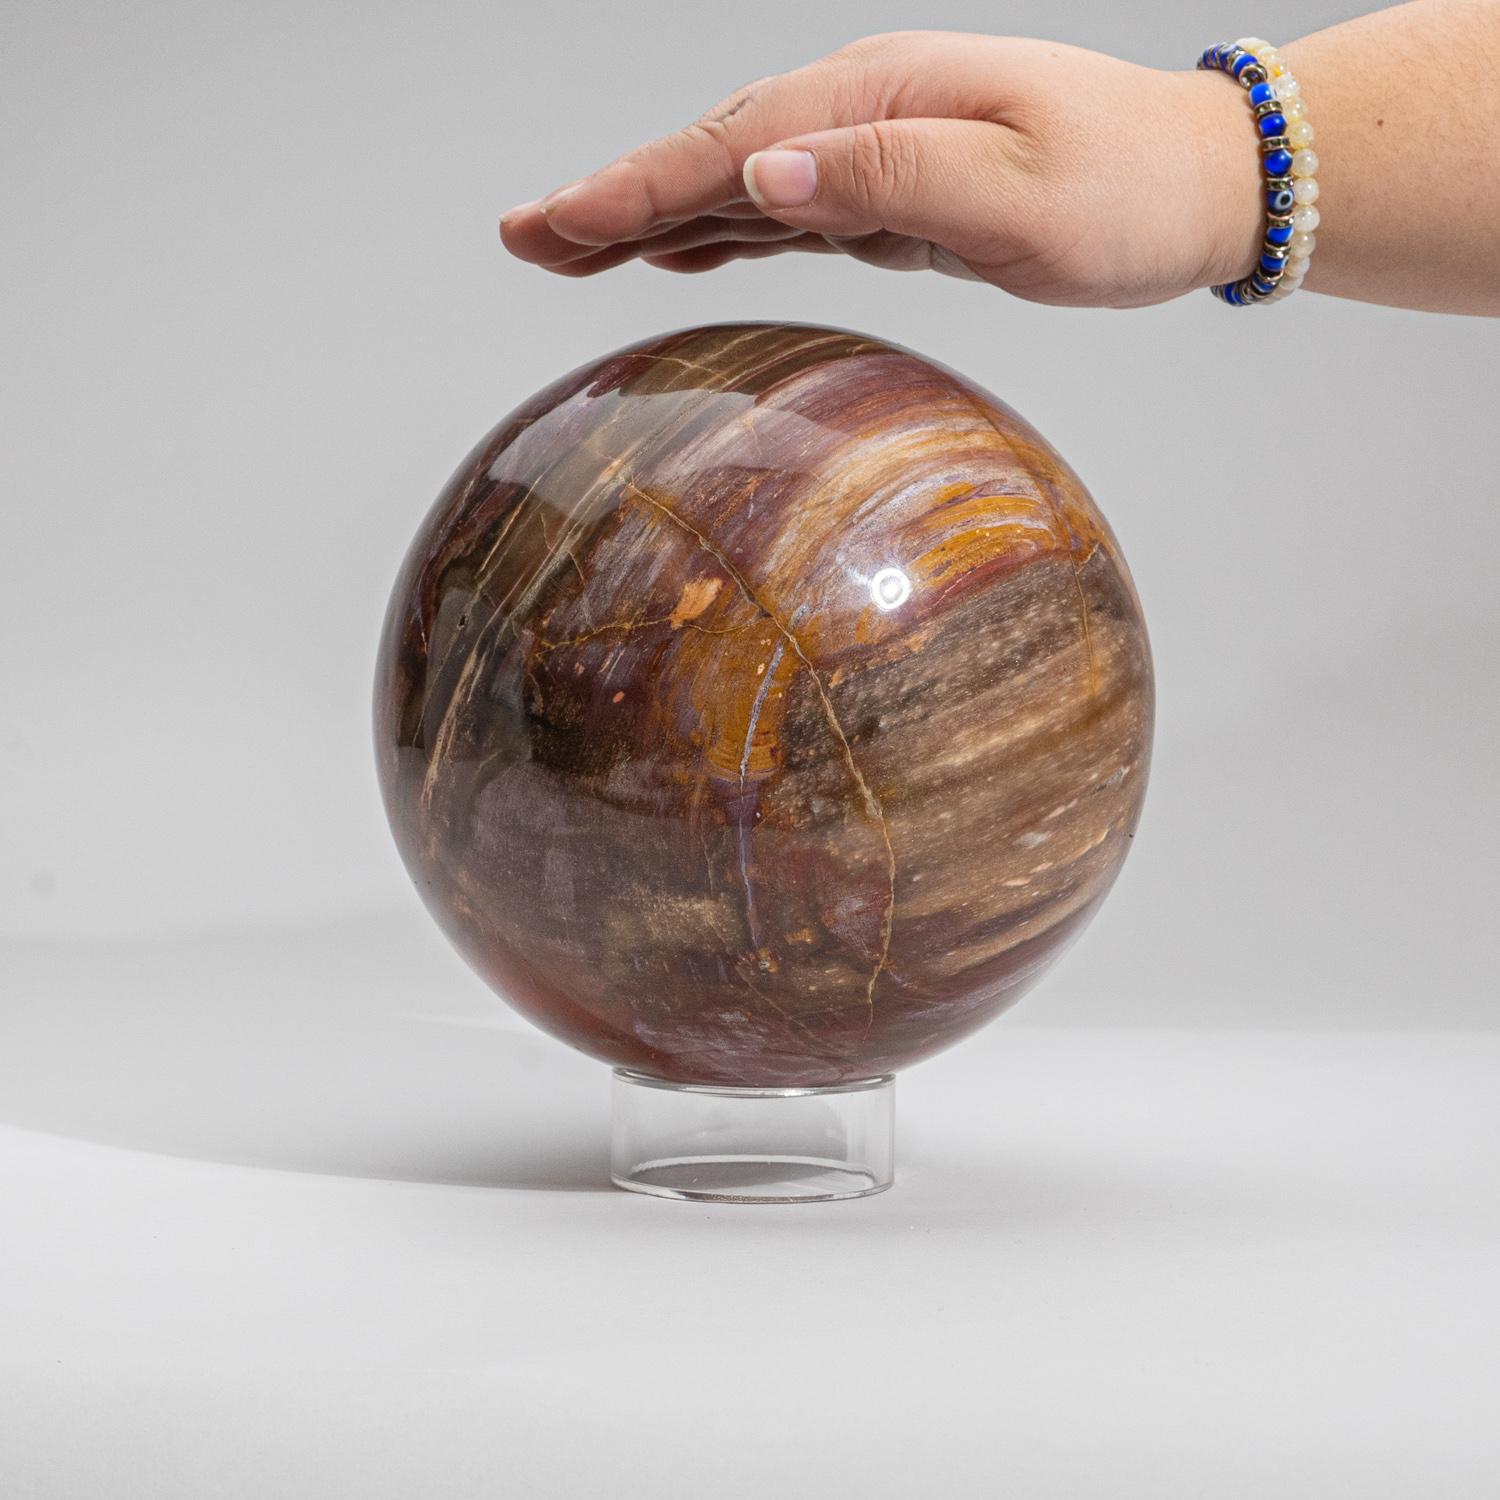 Malagasy Large Genuine Polished Petrified Wood Sphere from Madagascar (6.75